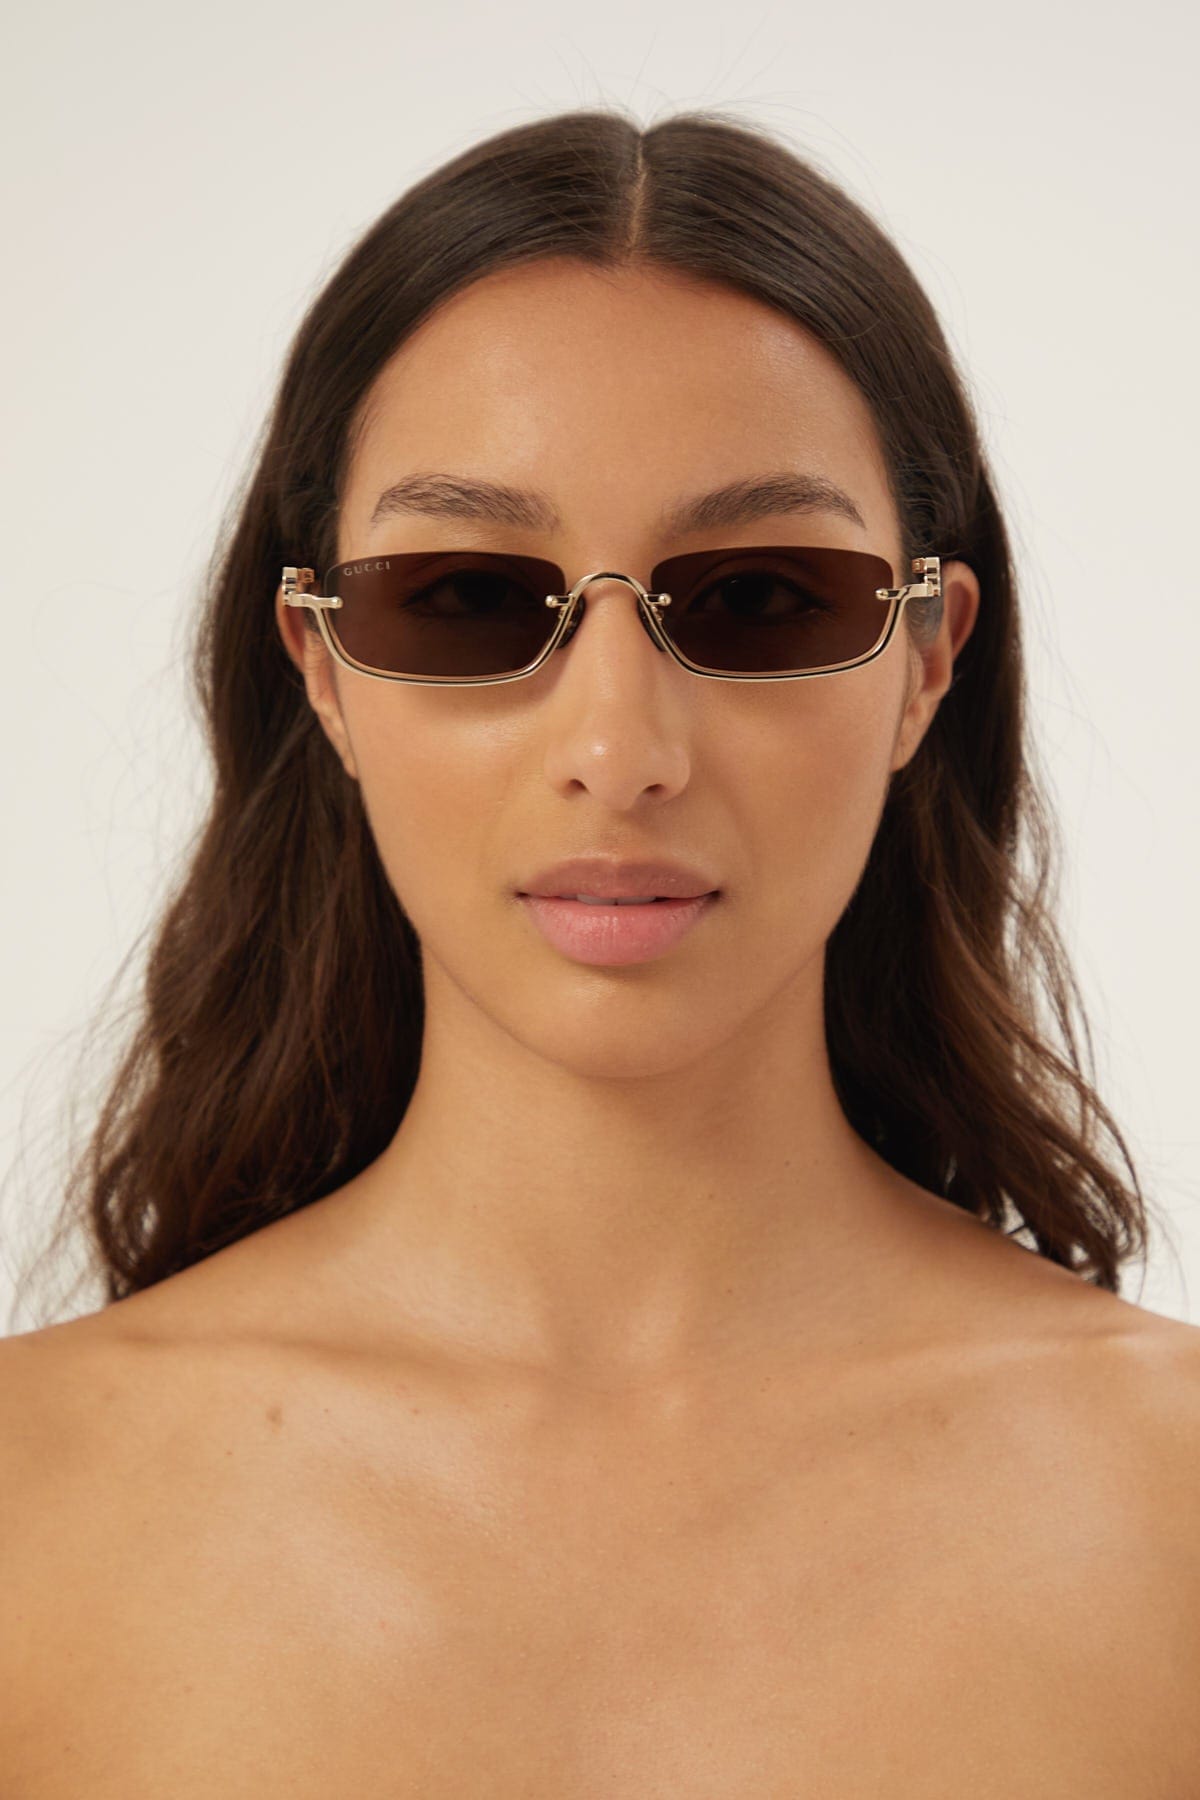 Gucci micro metal sunglasses - Eyewear Club